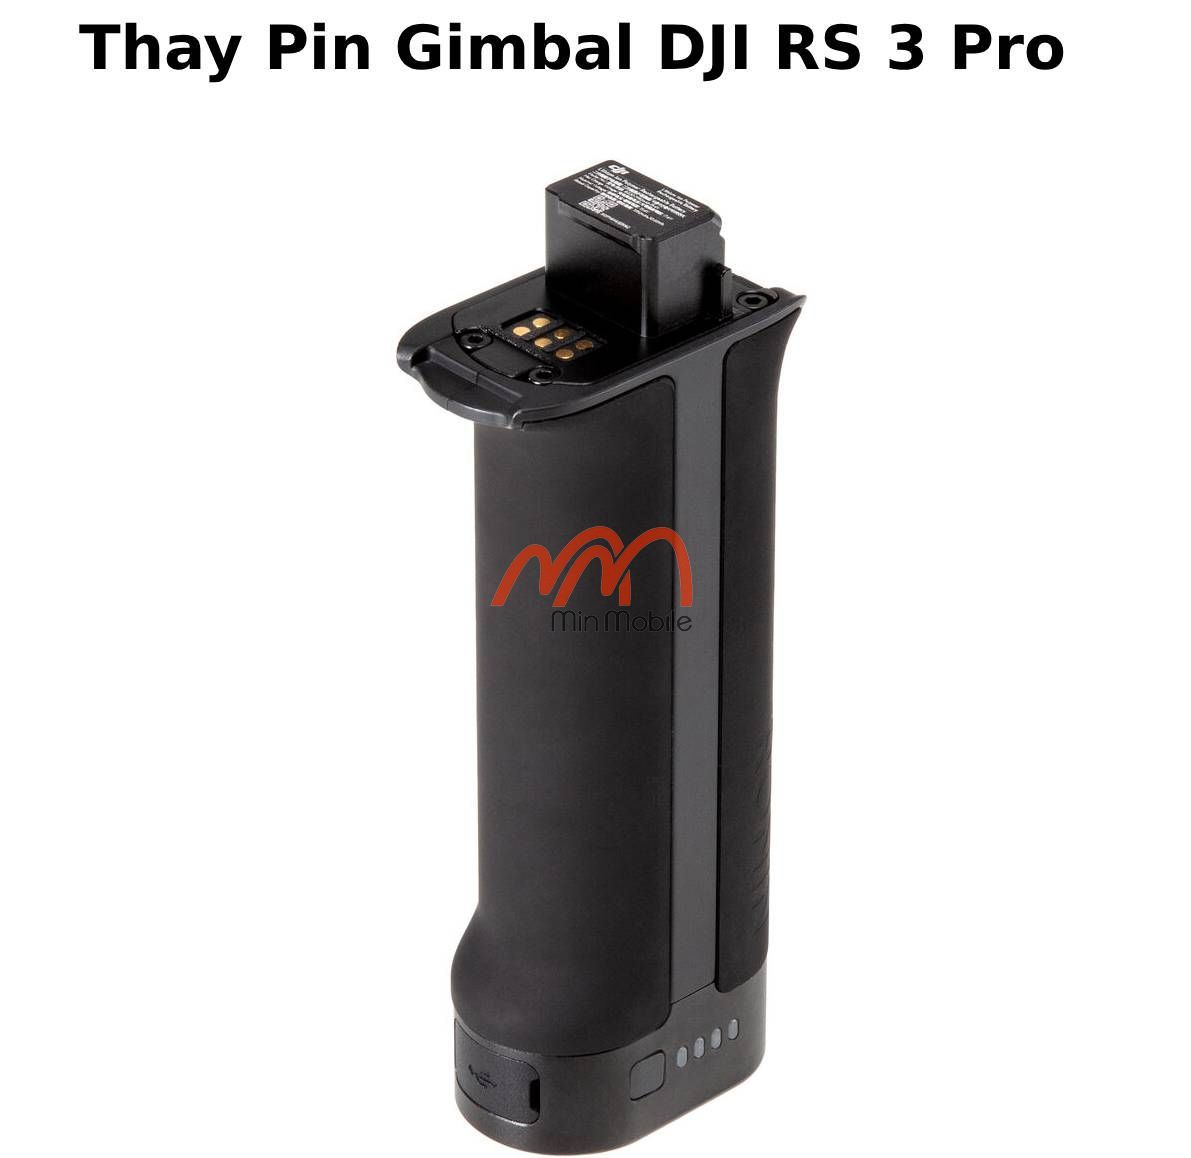 Thay Pin Gimbal DJI RS 3 Pro